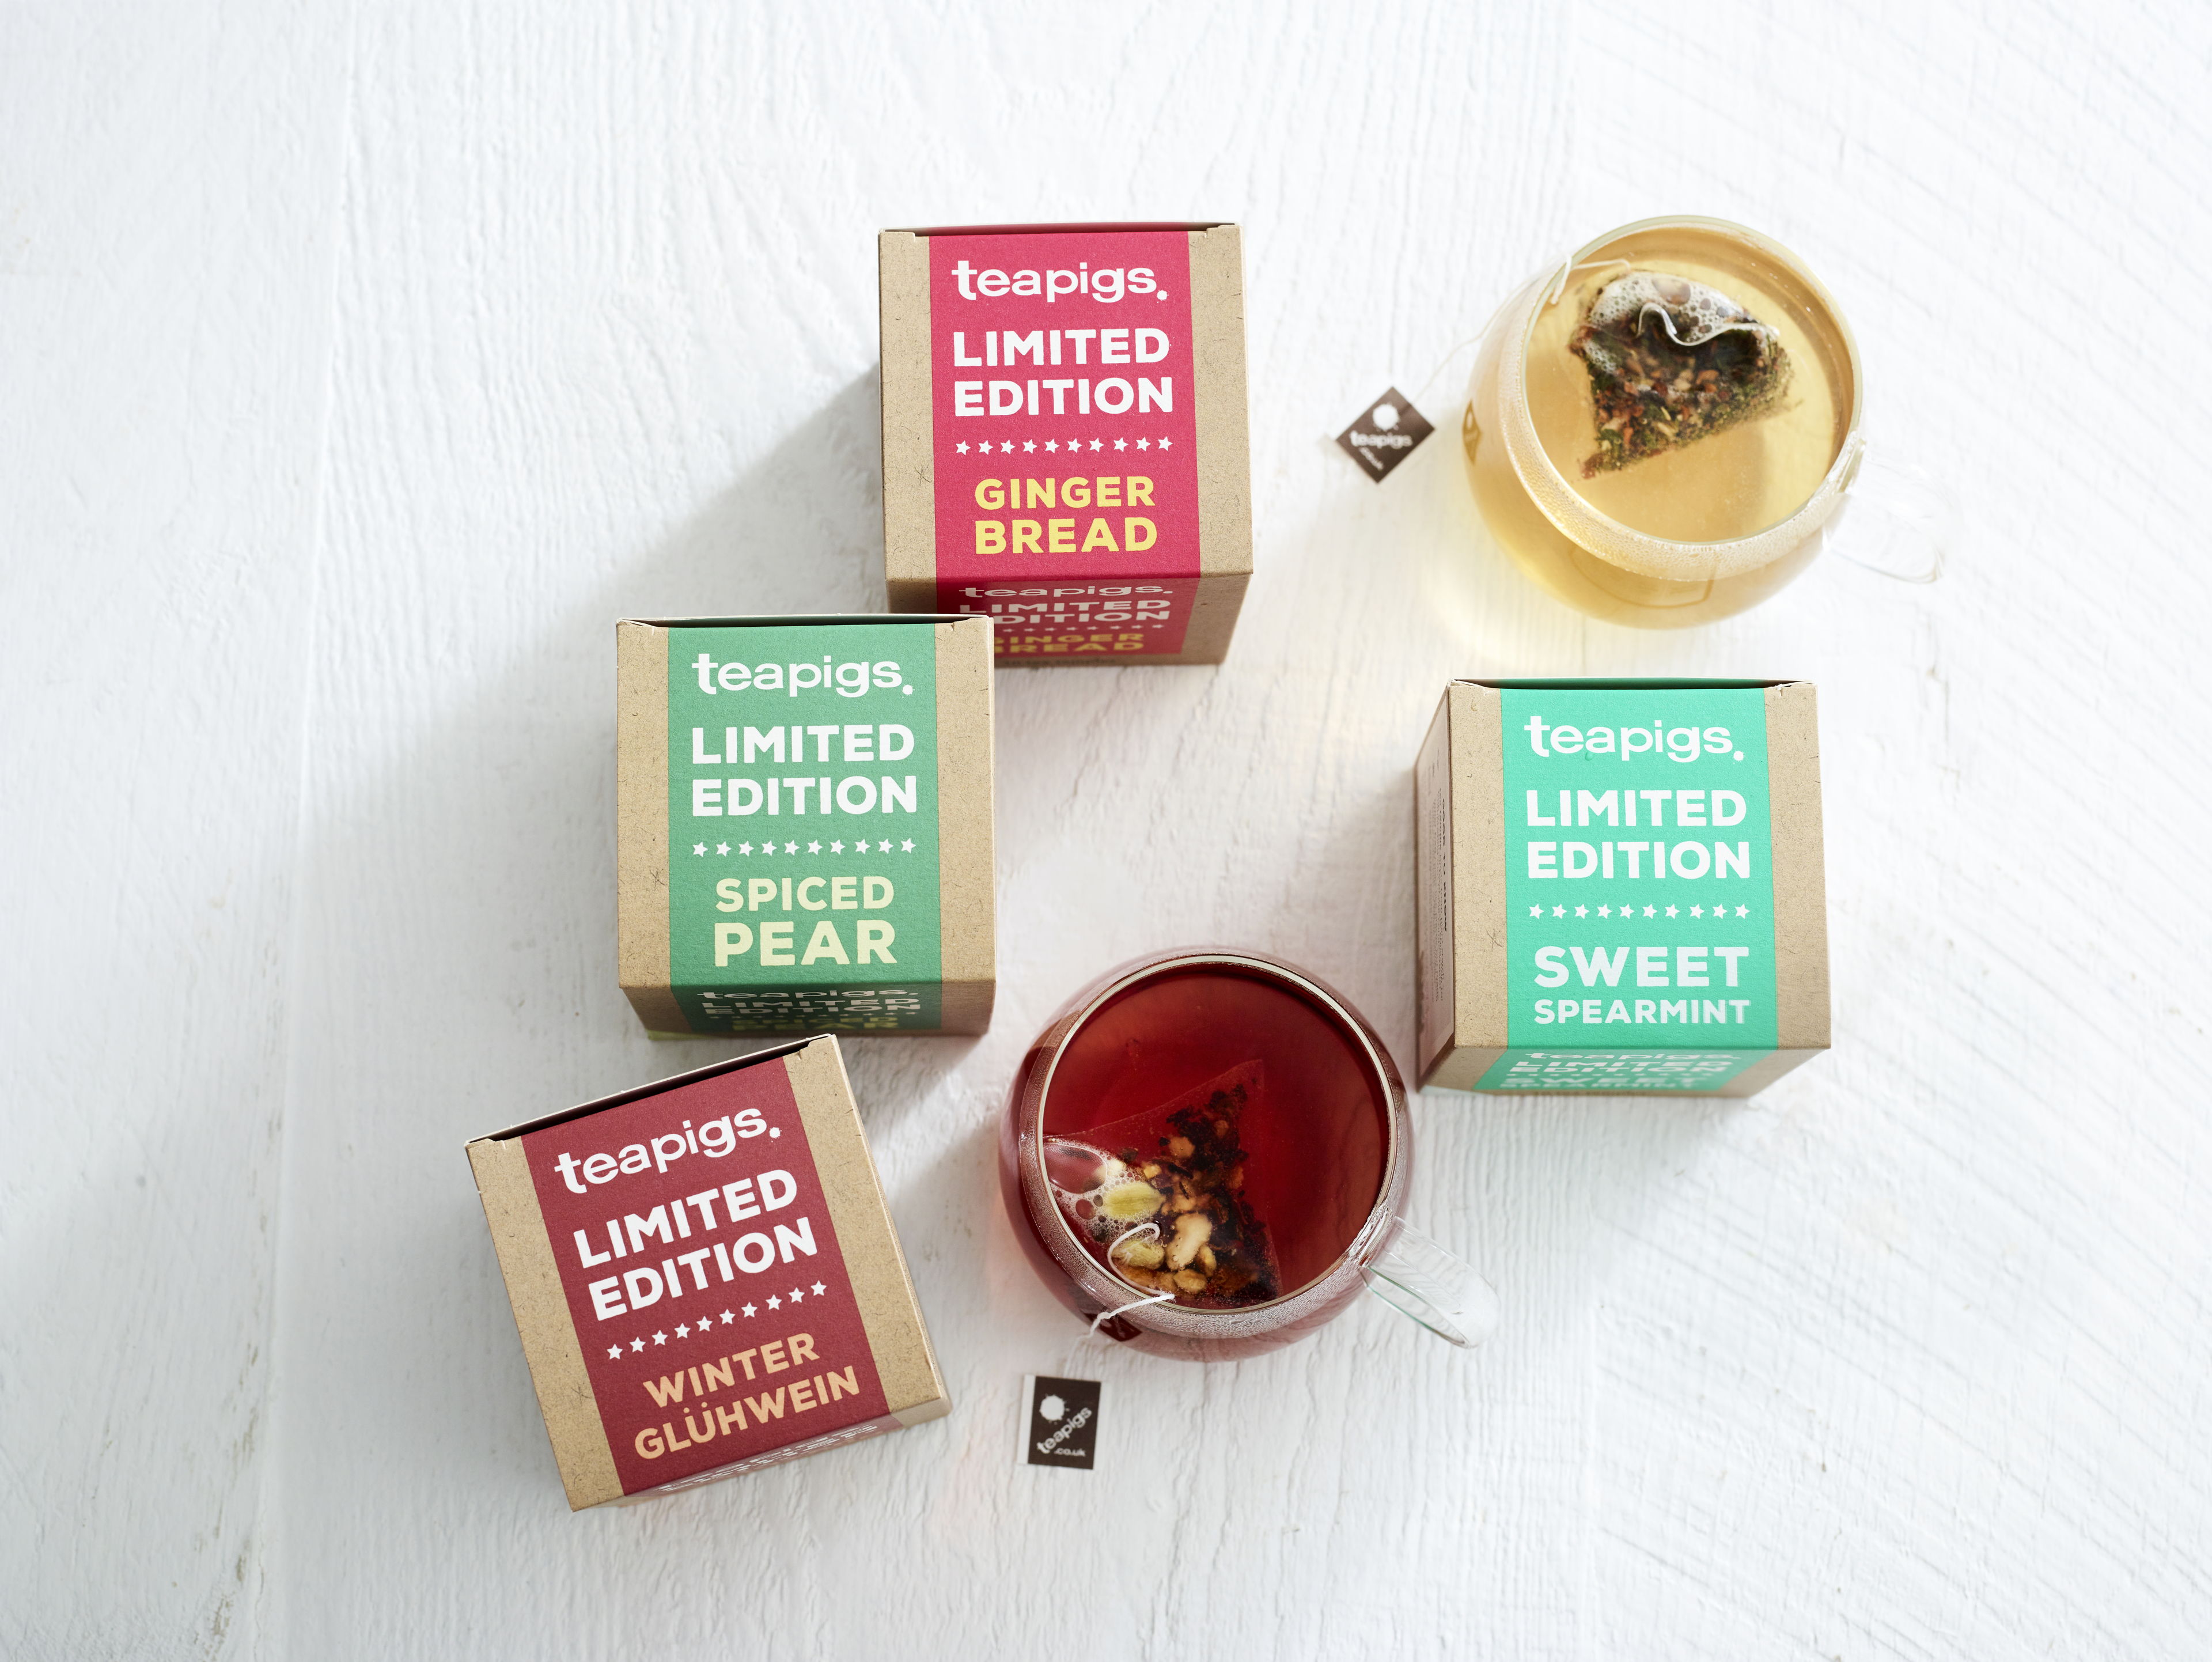 NEW! teapigs limited-edition holiday teas